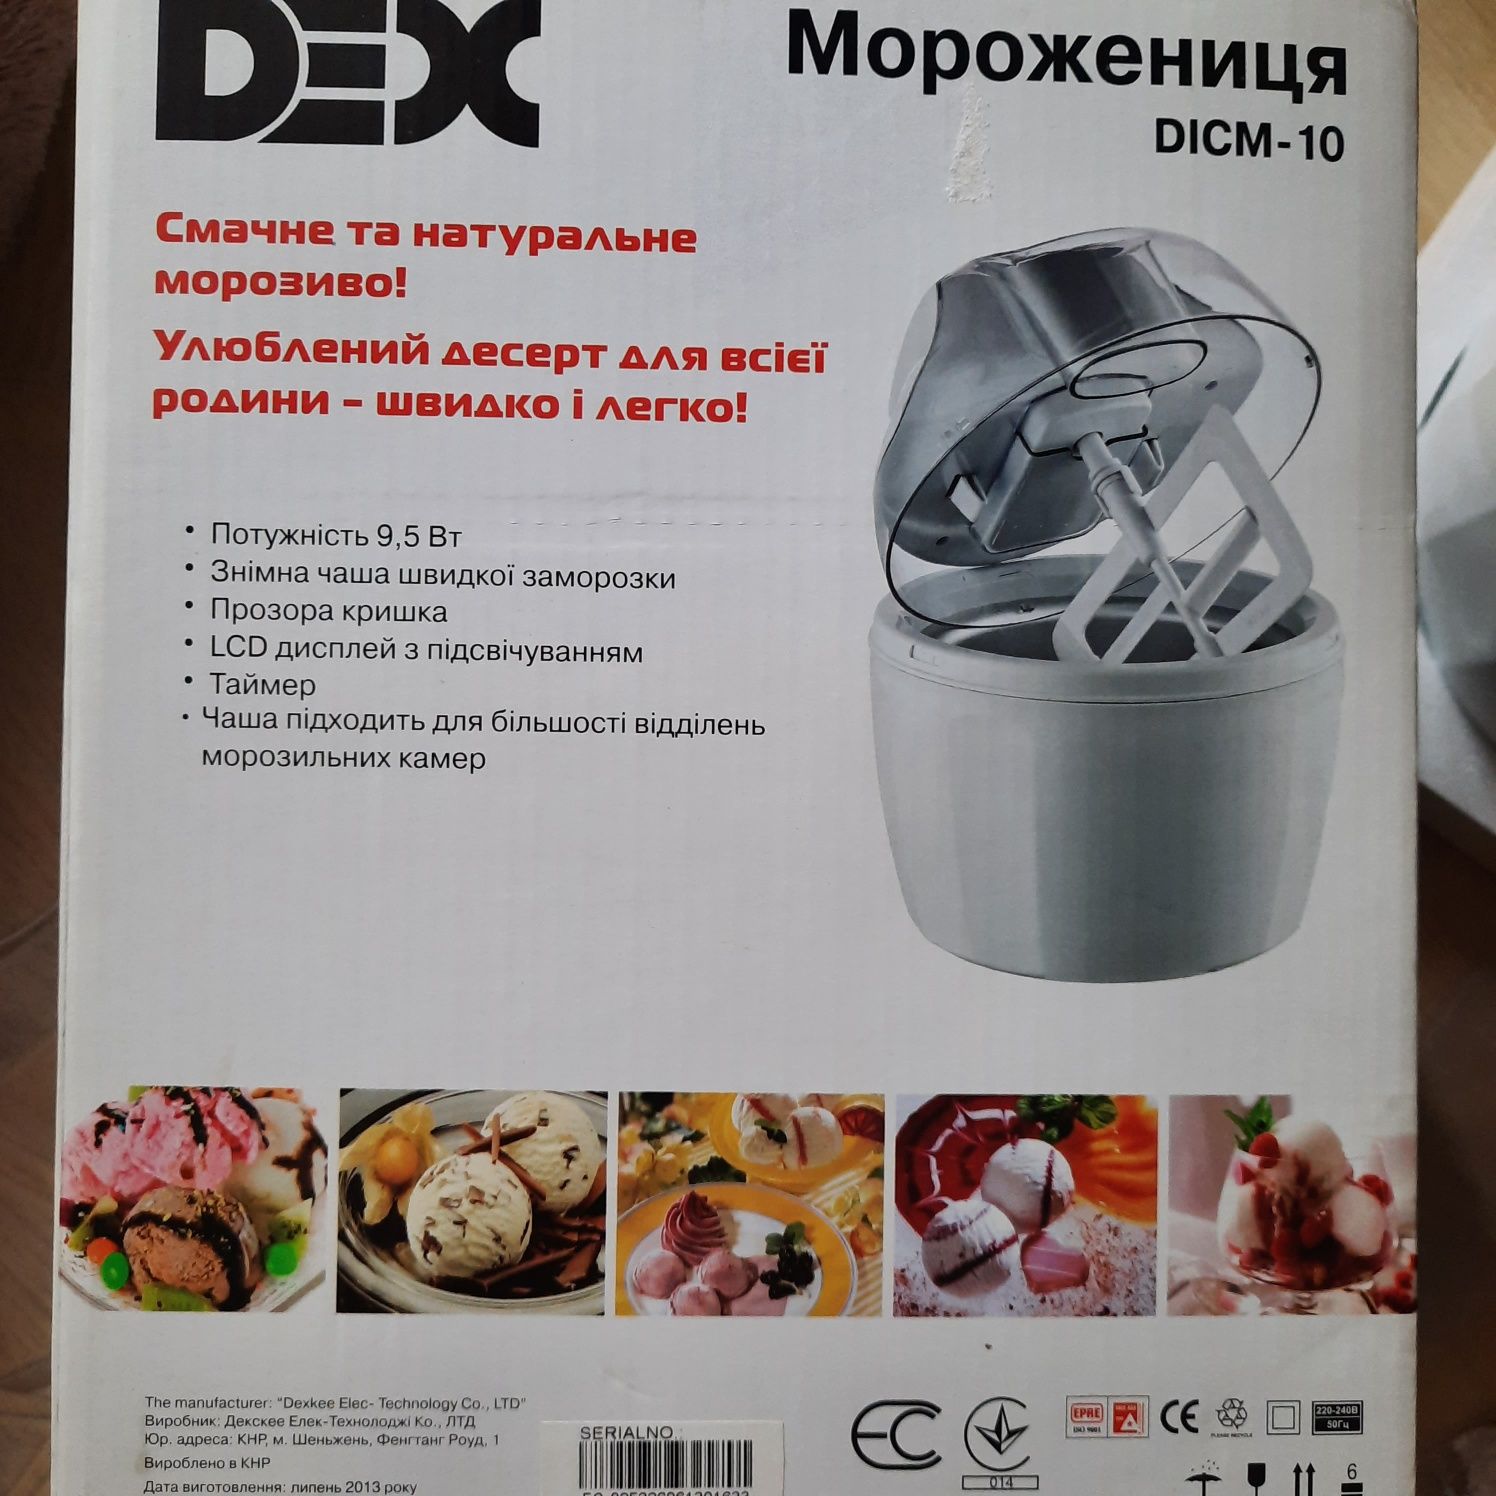 Мороженица DEX DICM-10